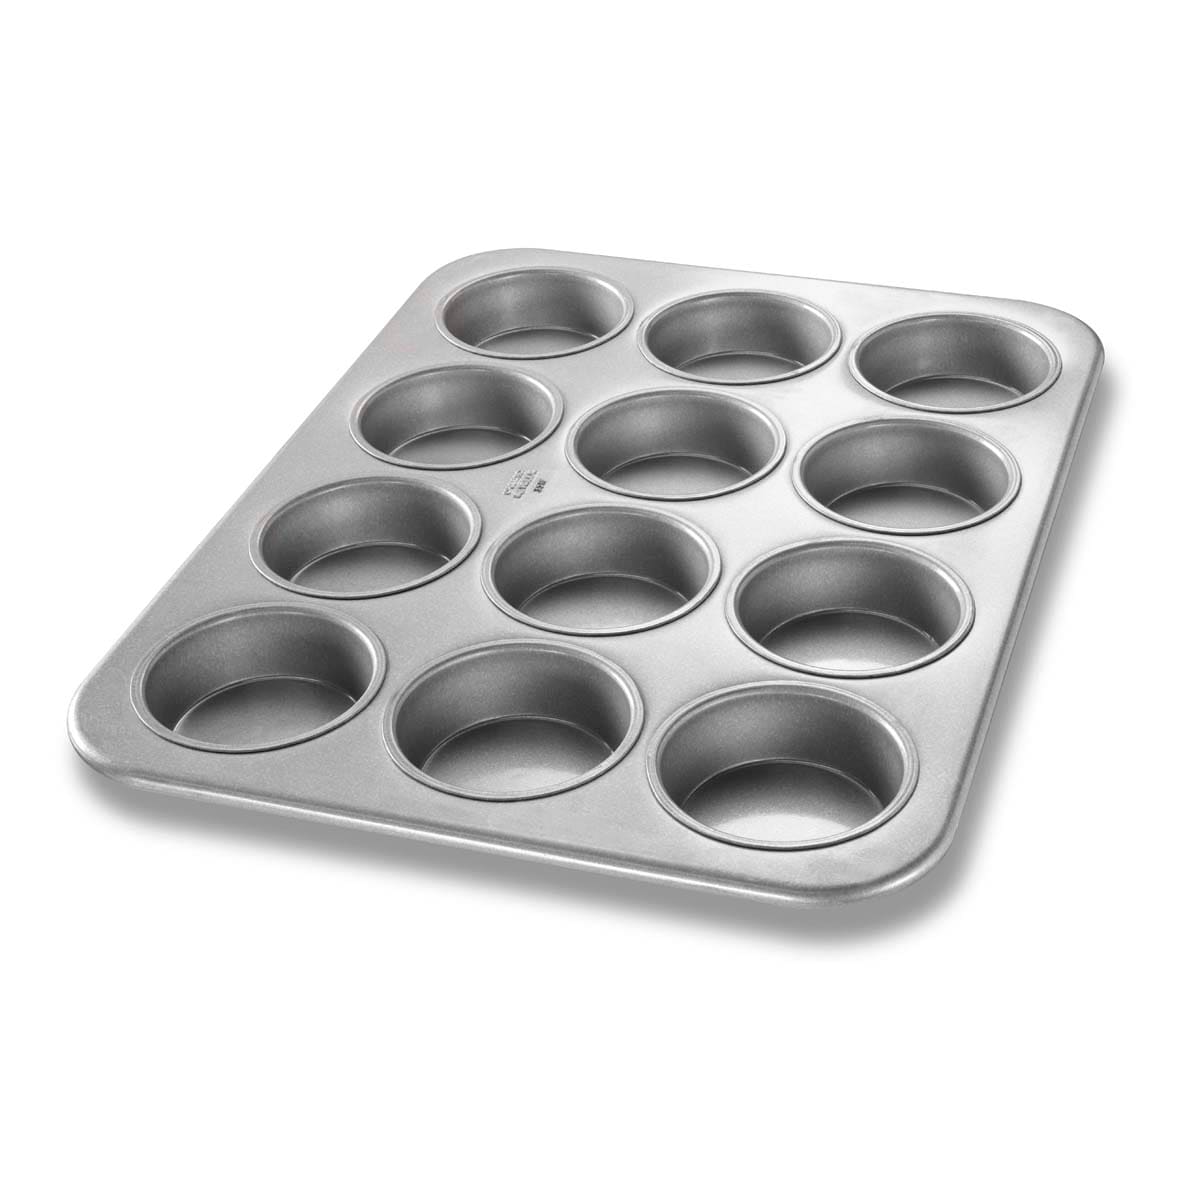 Chicago Metallic Baking Essentials Cupcake/Batter Dispenser